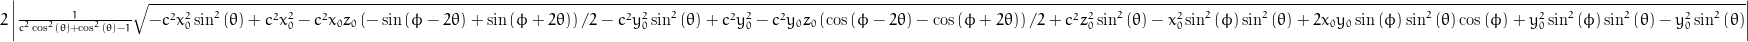 2 \left\lvert{\frac{1}{c^{2} \cos^{2}{\left (\theta \right )} + \cos^{2}{\left (\theta \right )} - 1} \sqrt{- c^{2} x_{0}^{2} \sin^{2}{\left (\theta \right )} + c^{2} x_{0}^{2} - \frac{x_{0} z_{0}}{2} c^{2} \left(- \sin{\left (\phi - 2 \theta \right )} + \sin{\left (\phi + 2 \theta \right )}\right) - c^{2} y_{0}^{2} \sin^{2}{\left (\theta \right )} + c^{2} y_{0}^{2} - \frac{y_{0} z_{0}}{2} c^{2} \left(\cos{\left (\phi - 2 \theta \right )} - \cos{\left (\phi + 2 \theta \right )}\right) + c^{2} z_{0}^{2} \sin^{2}{\left (\theta \right )} - x_{0}^{2} \sin^{2}{\left (\phi \right )} \sin^{2}{\left (\theta \right )} + 2 x_{0} y_{0} \sin{\left (\phi \right )} \sin^{2}{\left (\theta \right )} \cos{\left (\phi \right )} + y_{0}^{2} \sin^{2}{\left (\phi \right )} \sin^{2}{\left (\theta \right )} - y_{0}^{2} \sin^{2}{\left (\theta \right )}}}\right\rvert